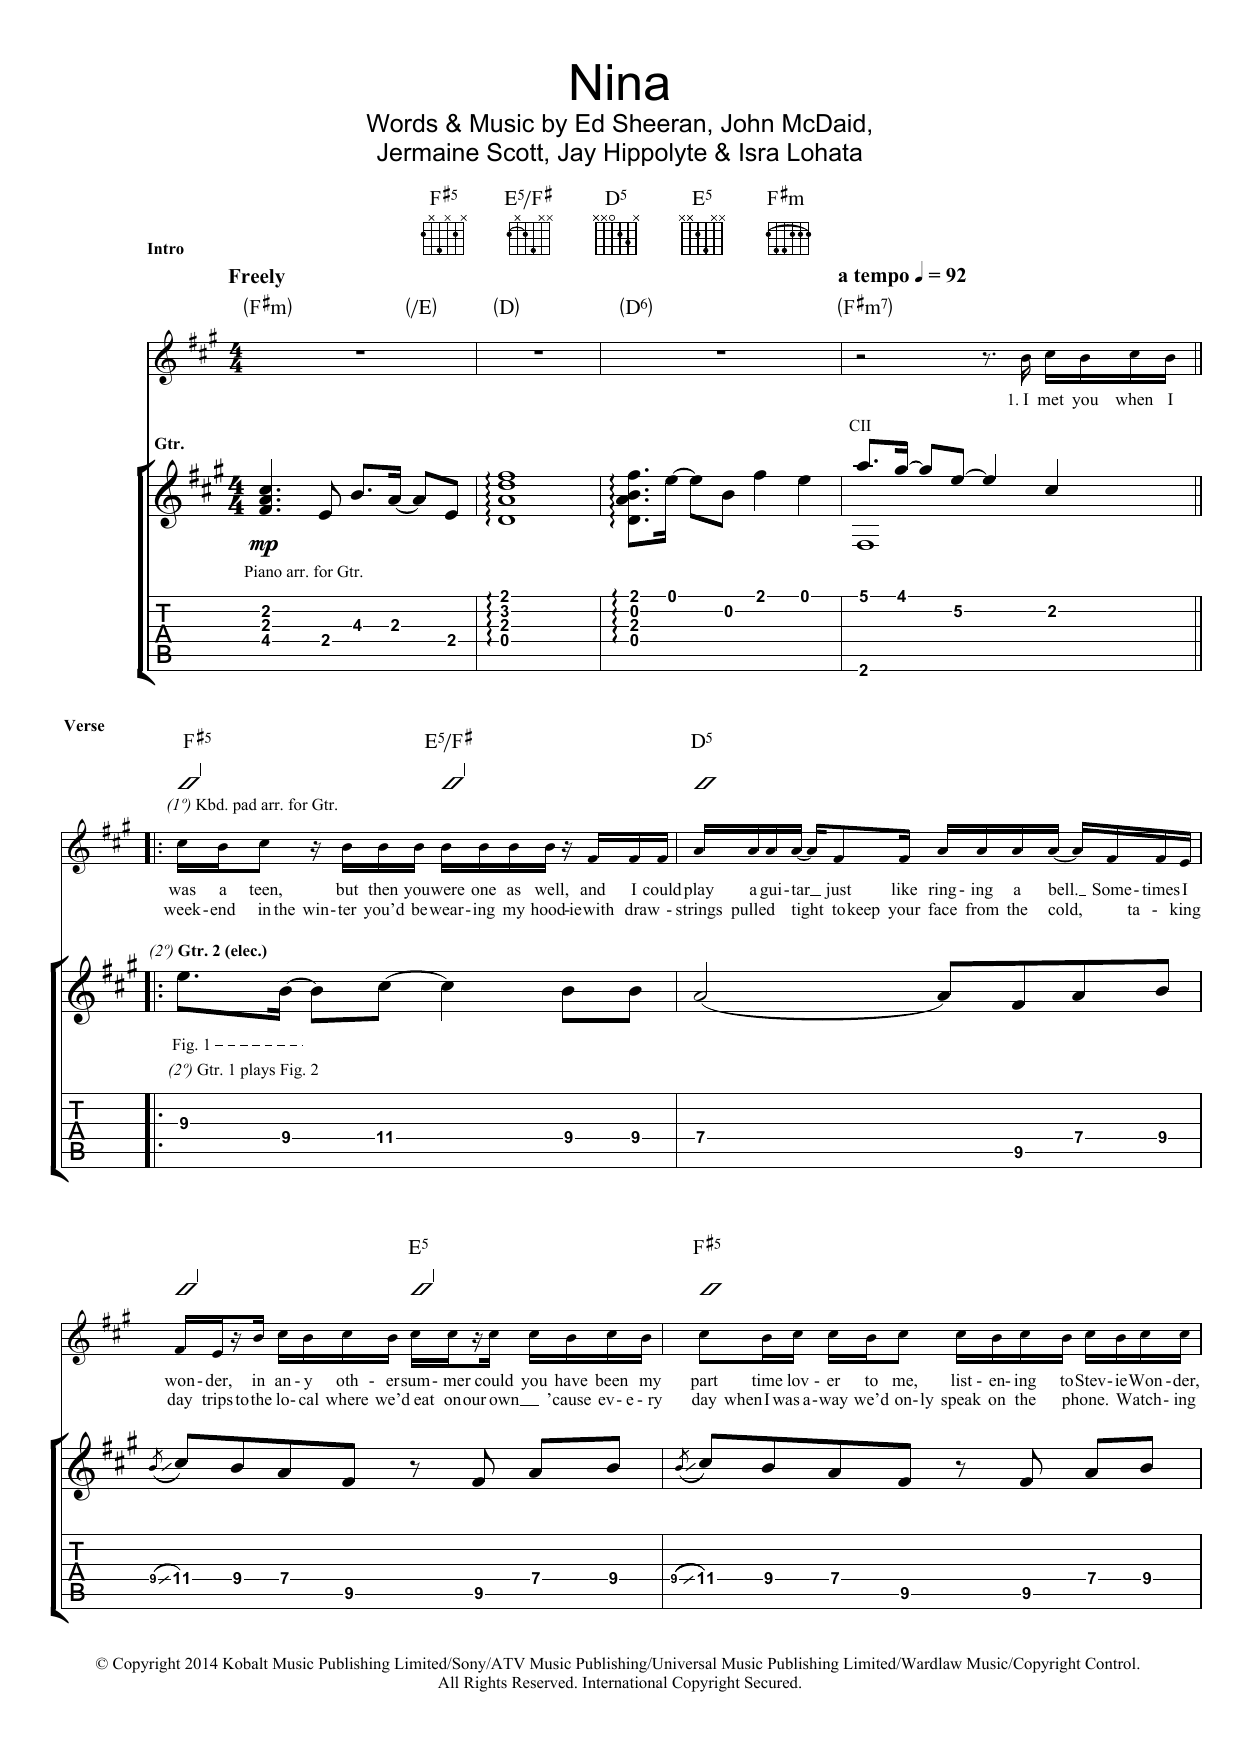 Download Ed Sheeran Nina Sheet Music and learn how to play Lyrics & Chords PDF digital score in minutes